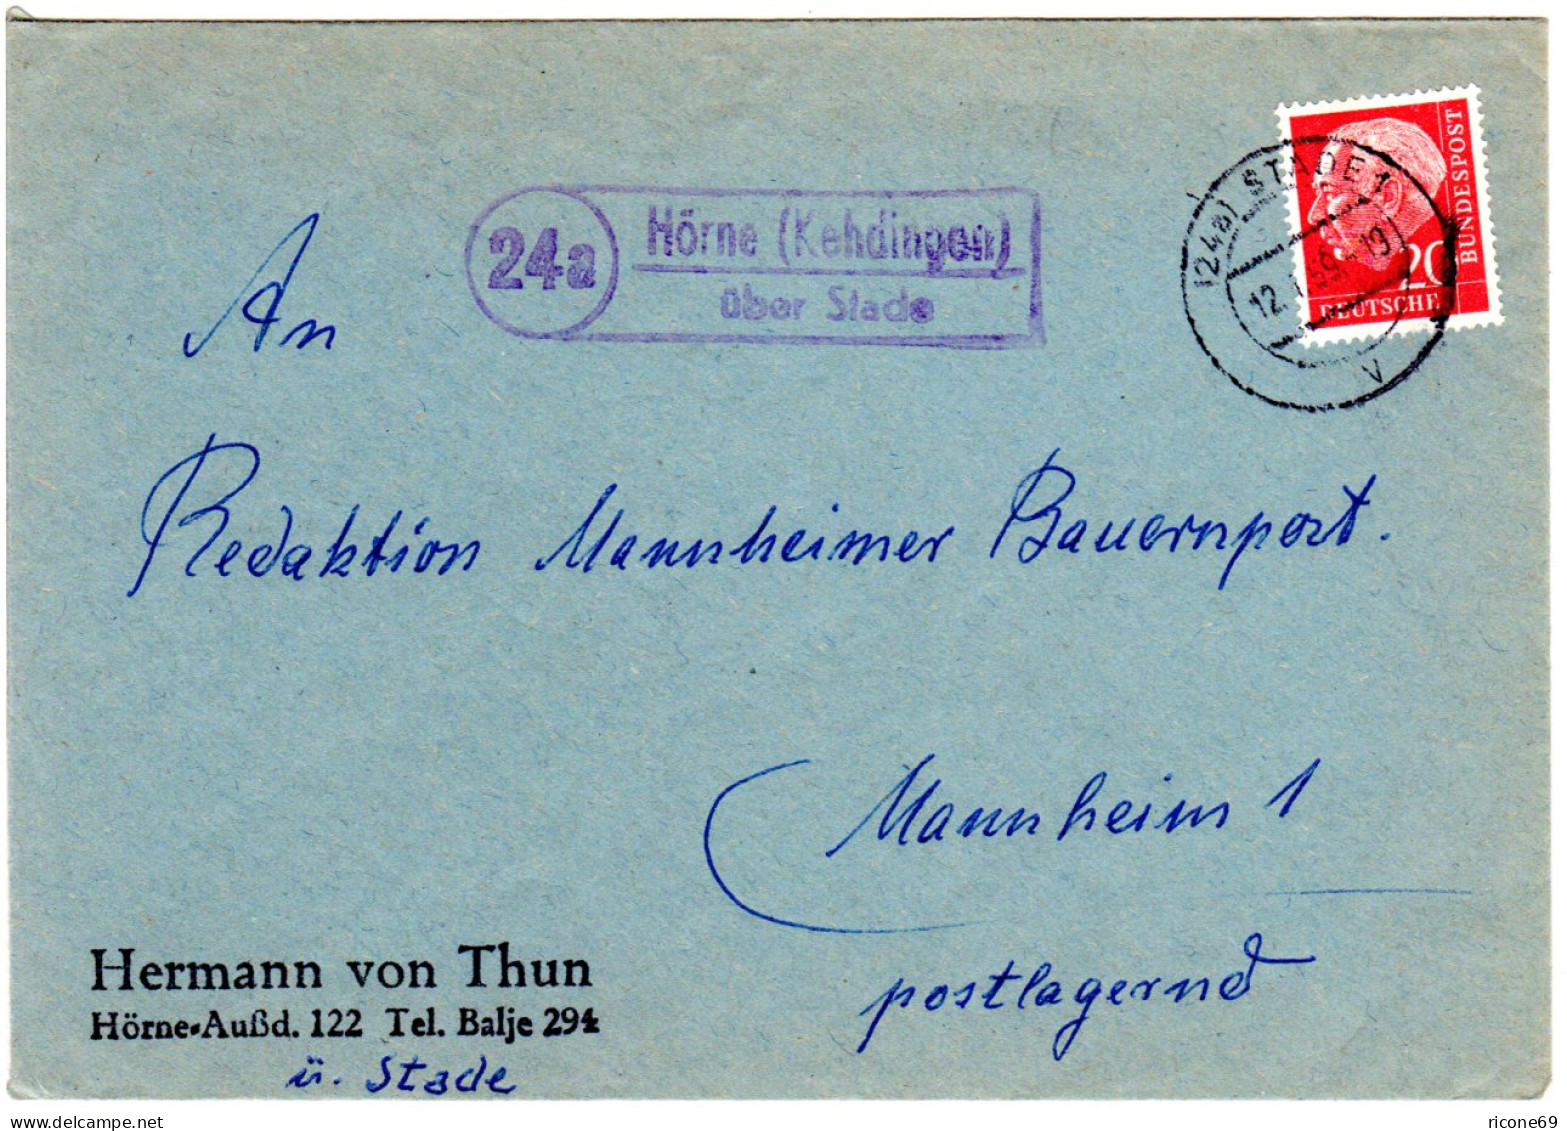 BRD 1959, Landpost Stpl. 24a HÖRNE (Kehdingen) über Stade Auf Brief M. 20 Pf. - Collections